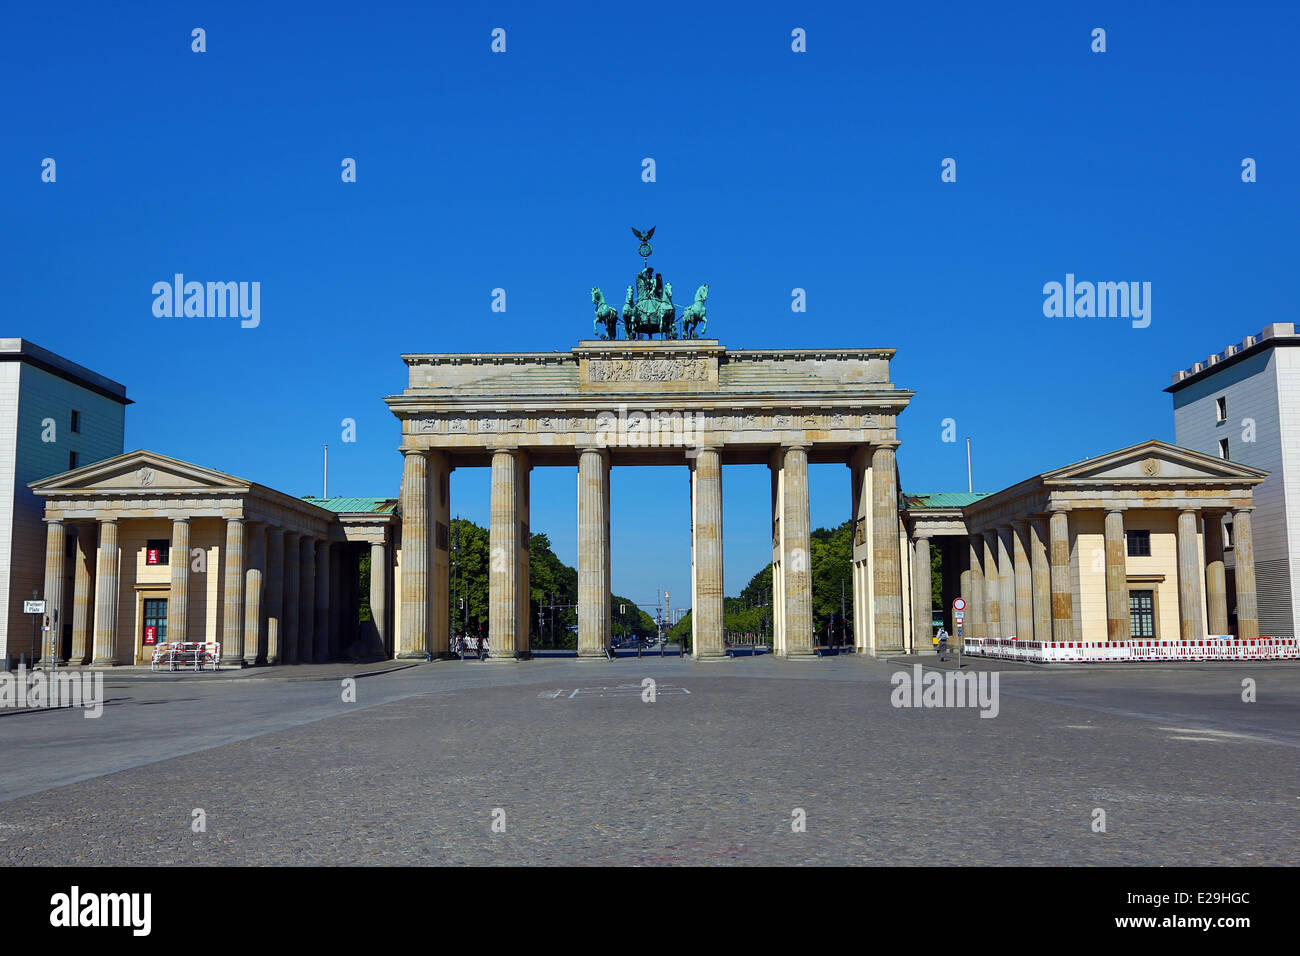 The Brandenburg Gate, Brandenburger Tor, neoclassical triumphant arch in Berlin, Germany  Stock Photo